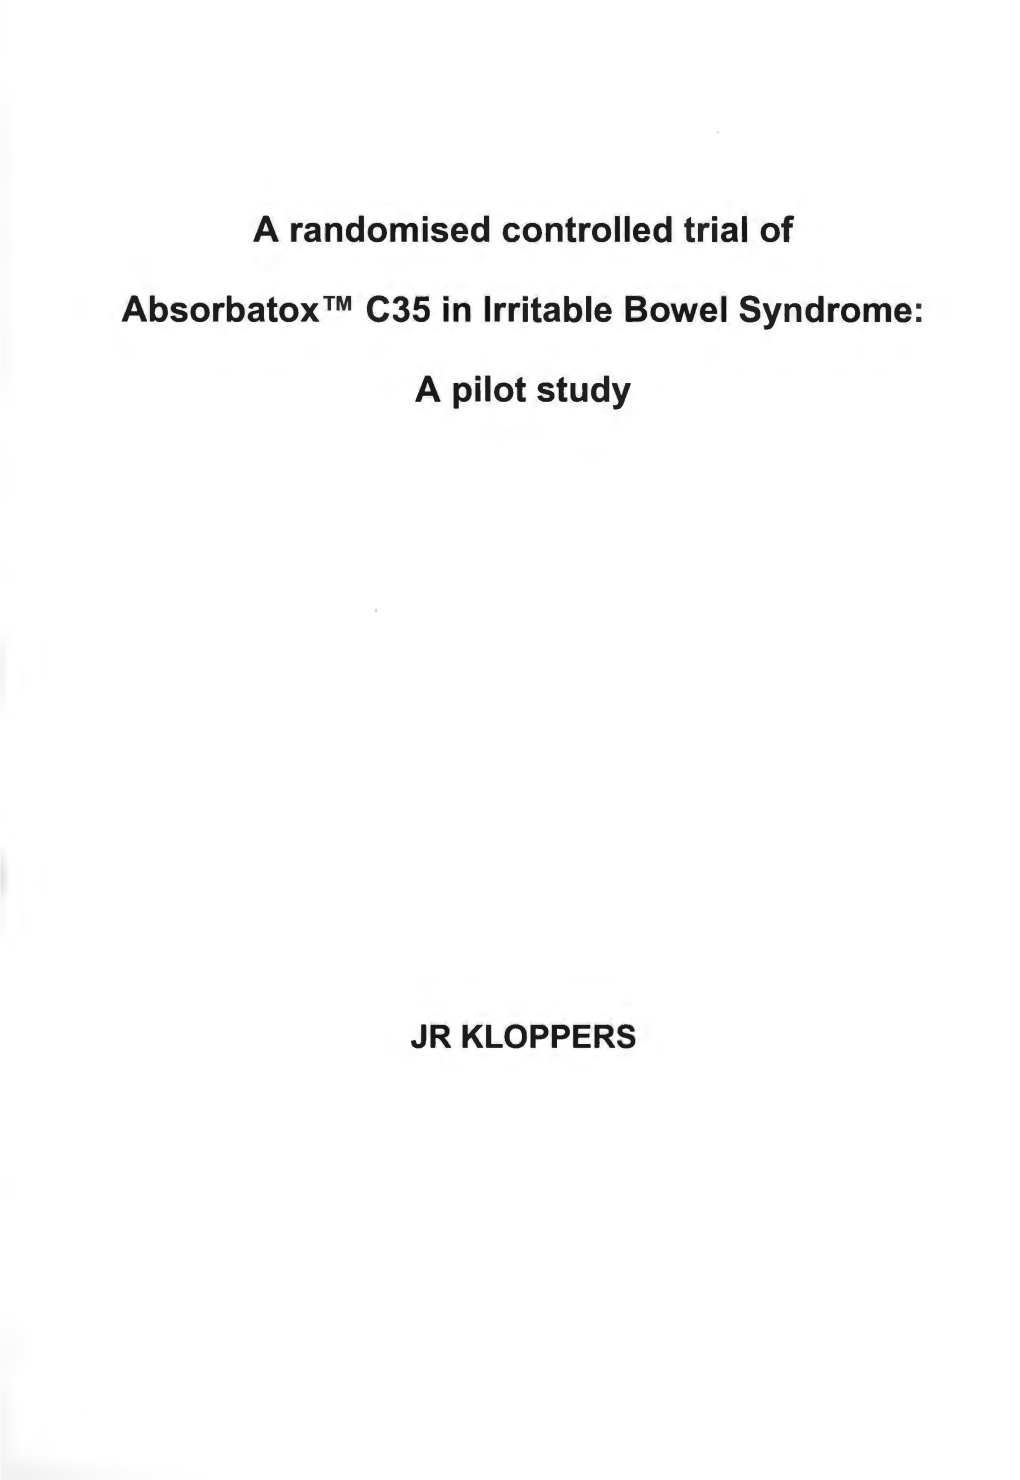 A Randomised Controlled Trial of Absorbatox™ C35 in Irritable Bowel